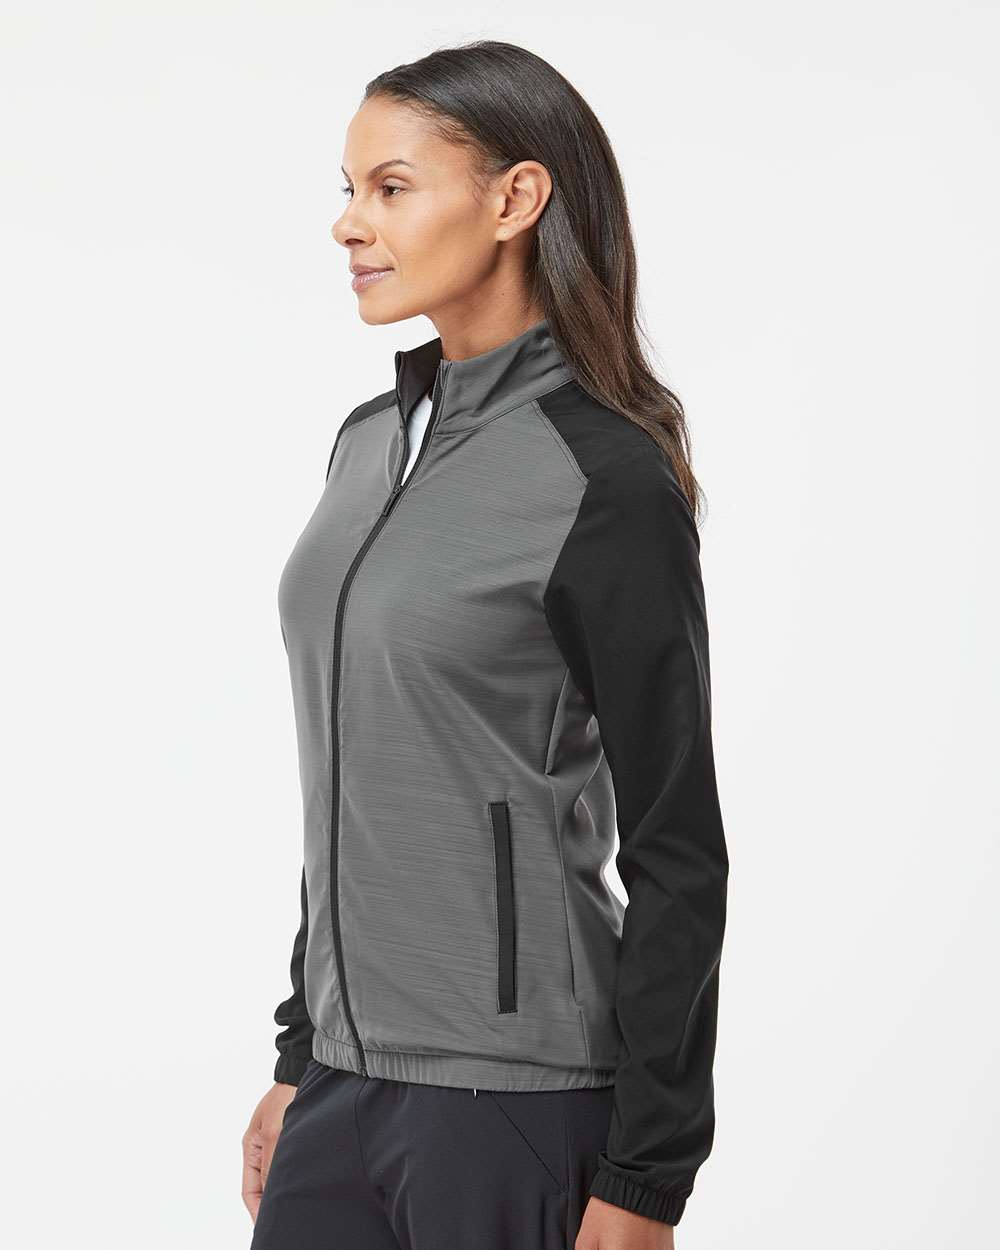 mero Oceanía Rústico Adidas A547 - Women's Heather Block Full-Zip Wind Jacket